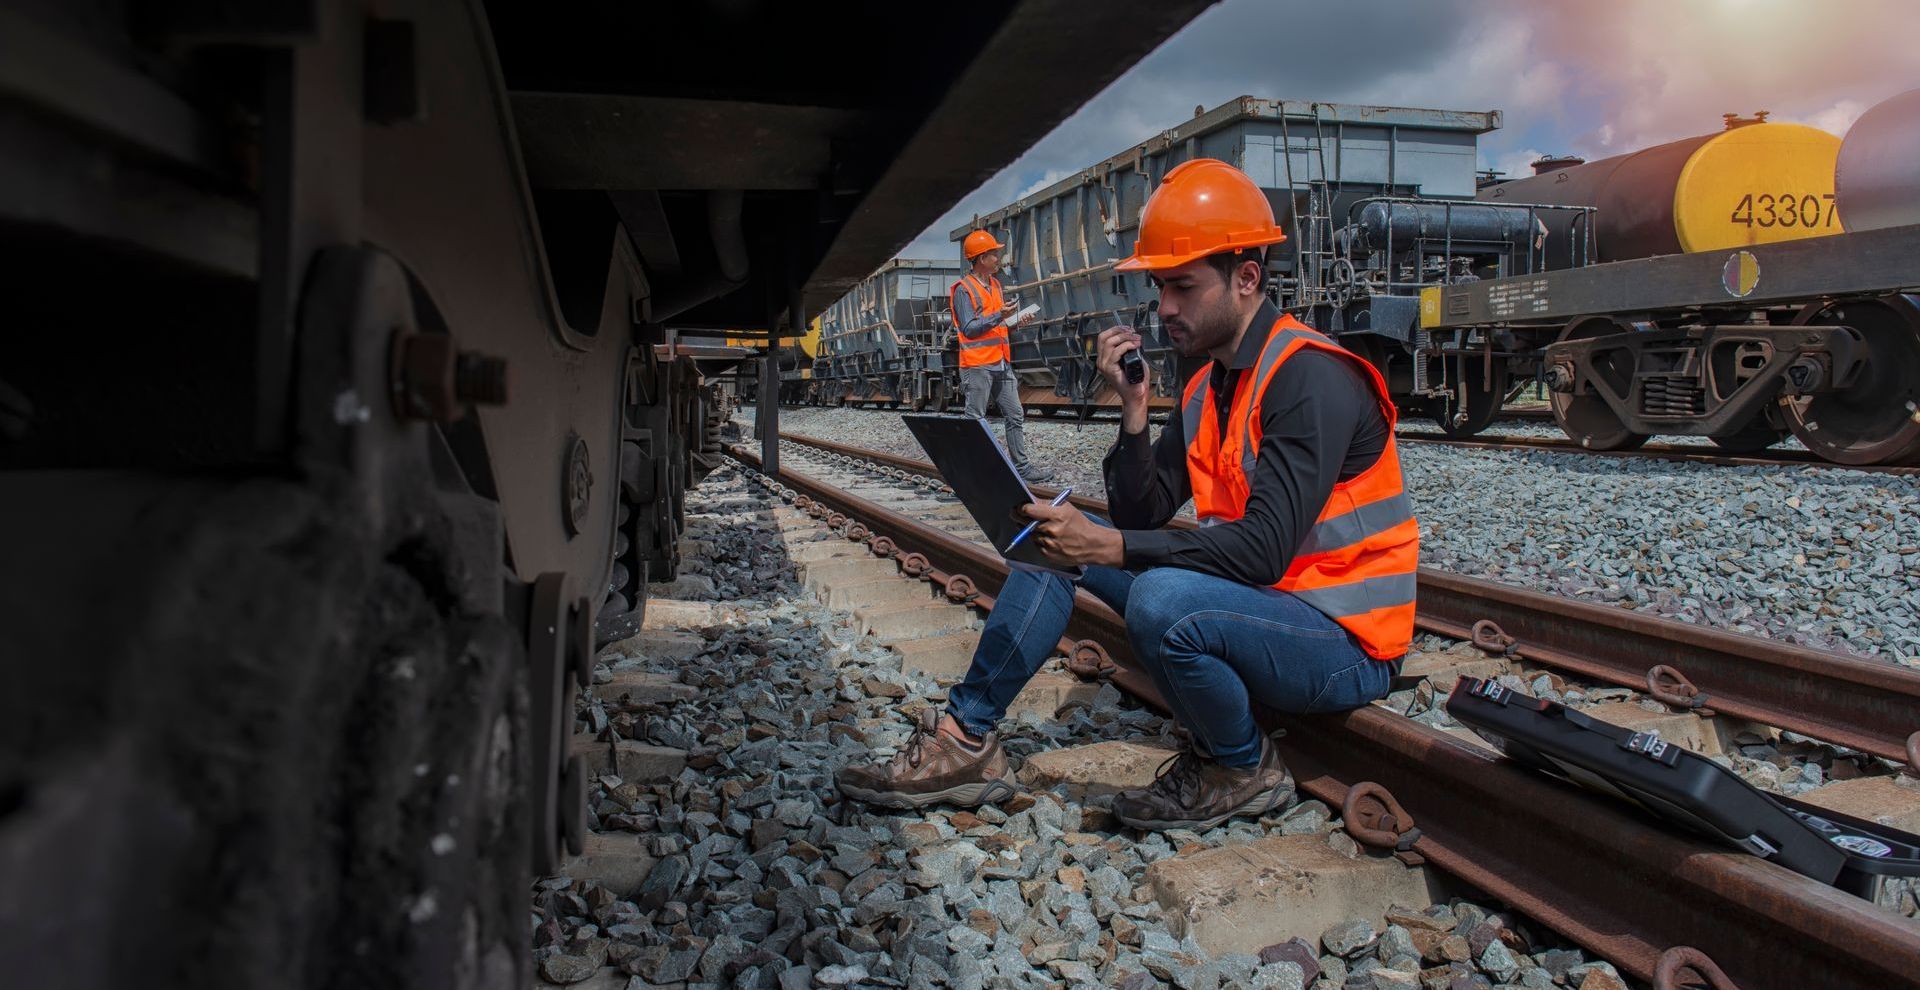 railway engineer working on automatic train protection